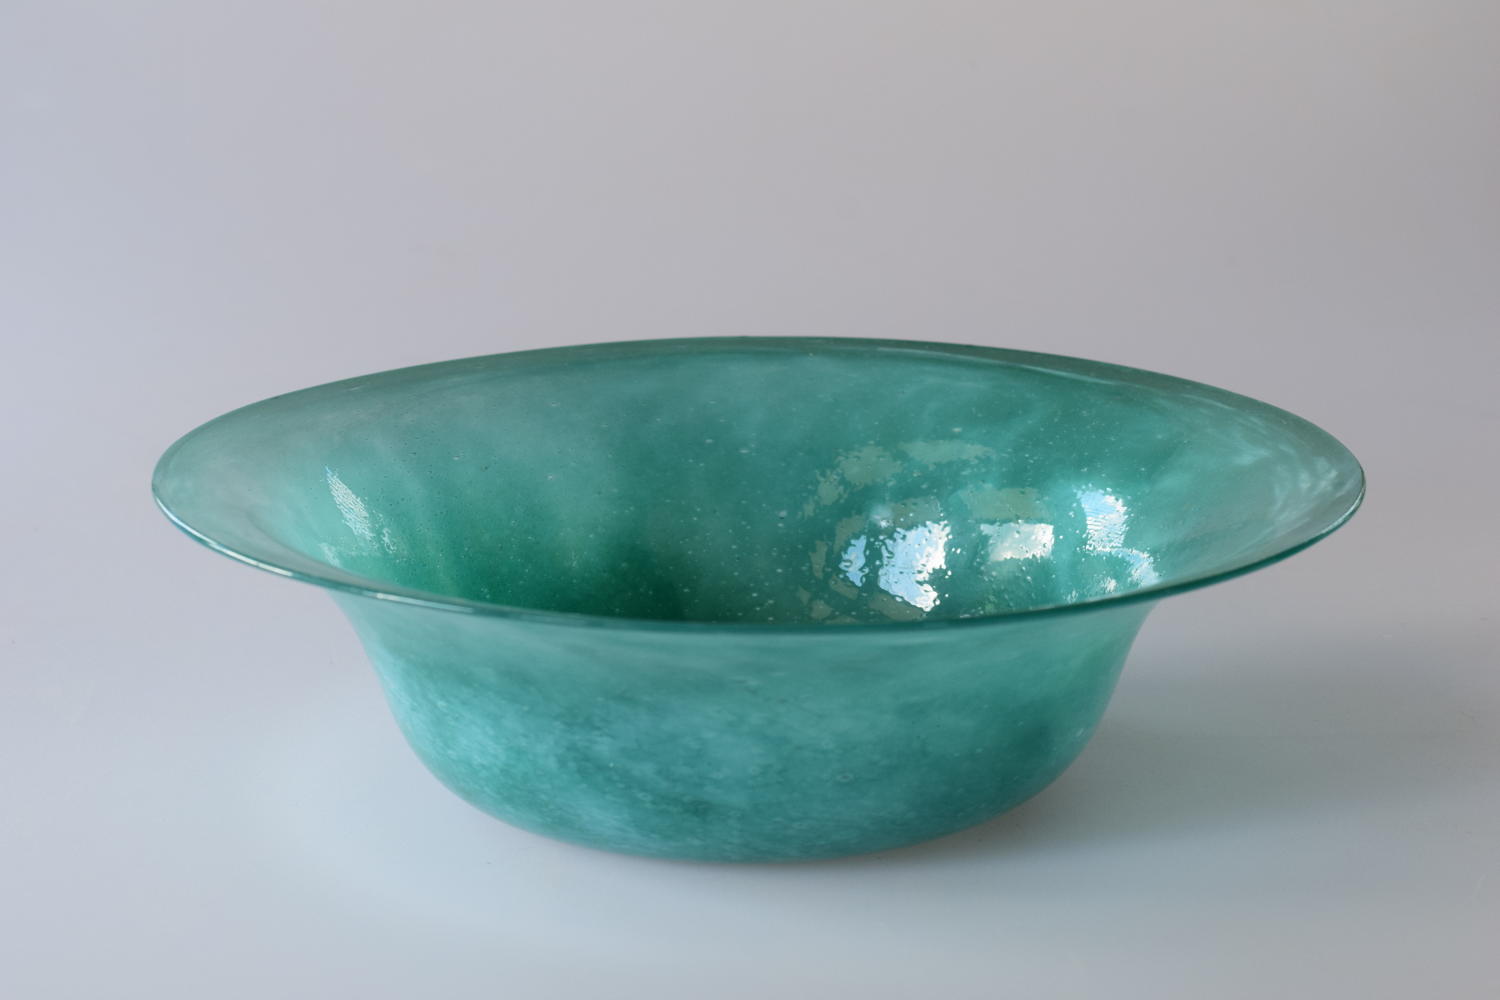 Cloudy blue bowl